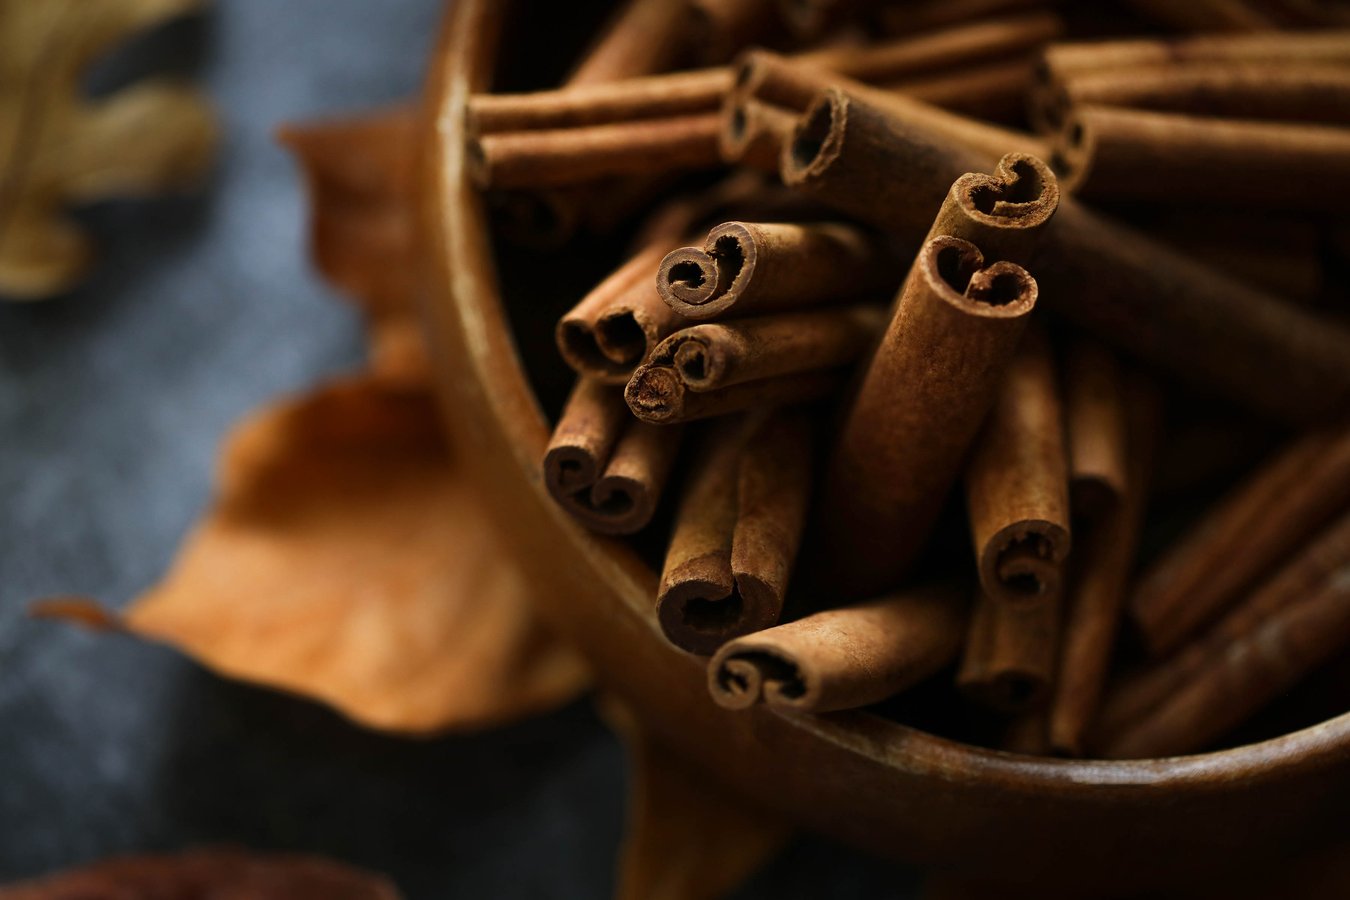 Bowl of cinnamon sticks